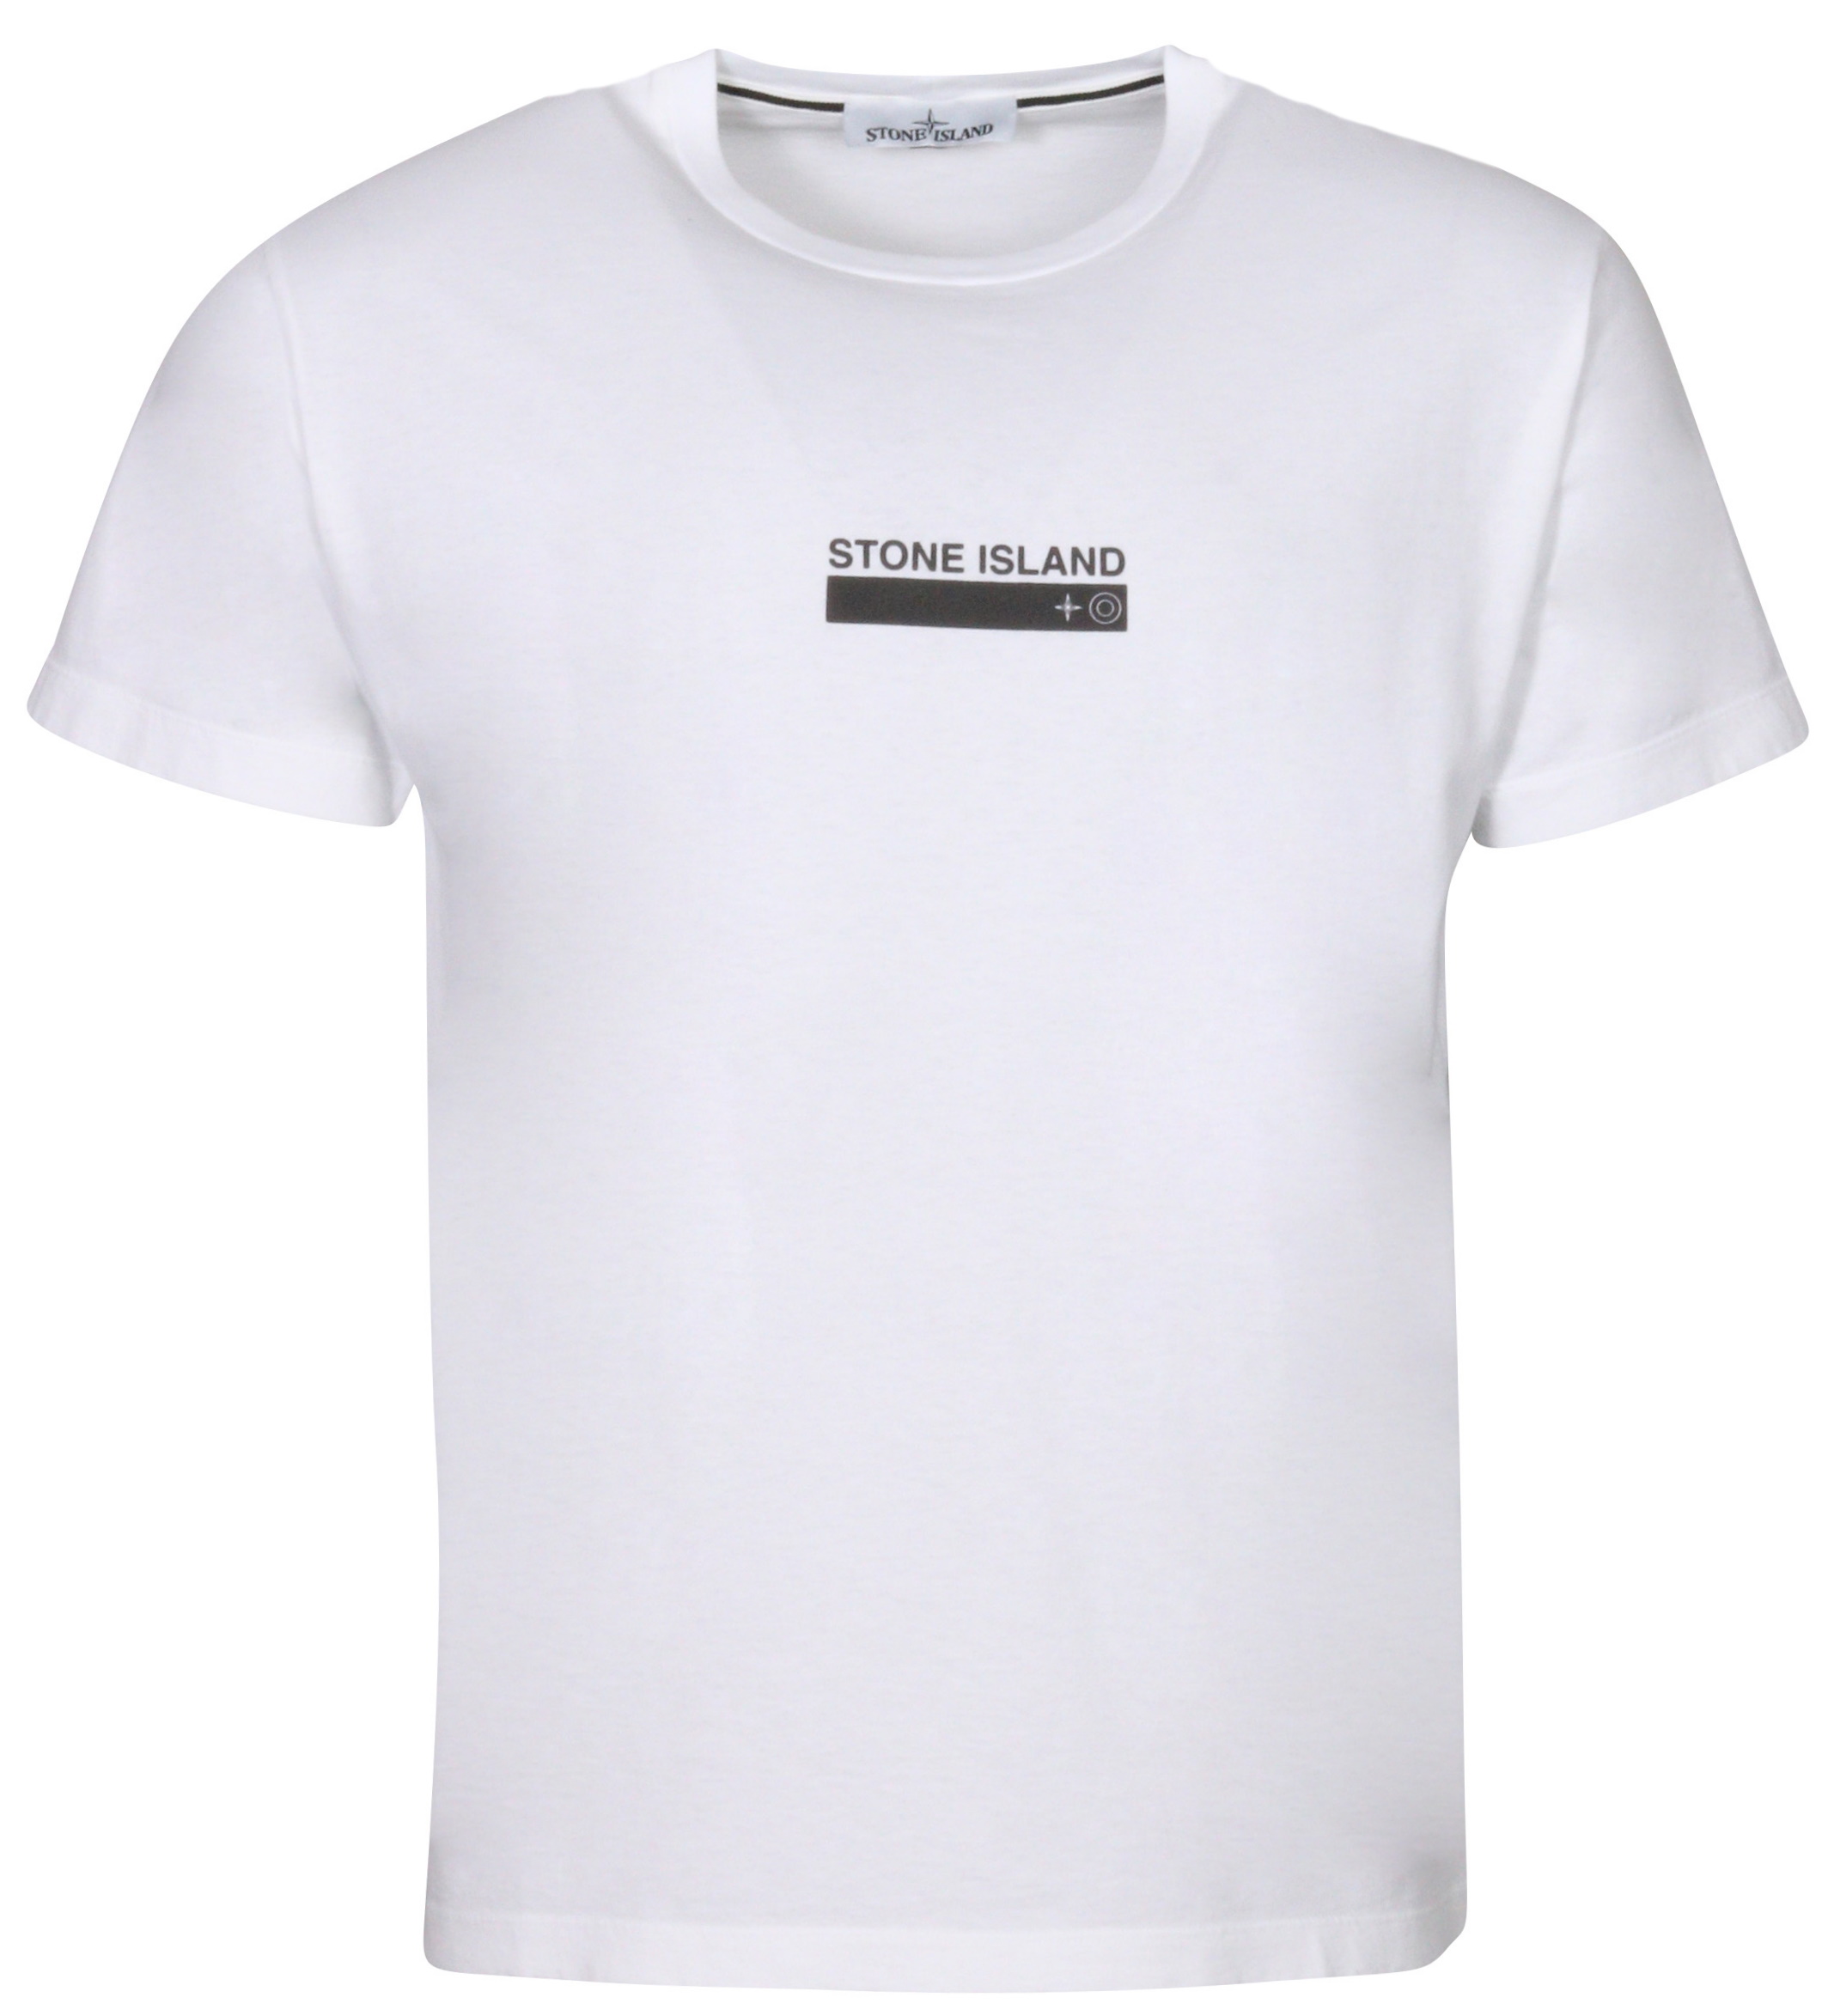 Stone Island T-Shirt White Rubberized Black Print